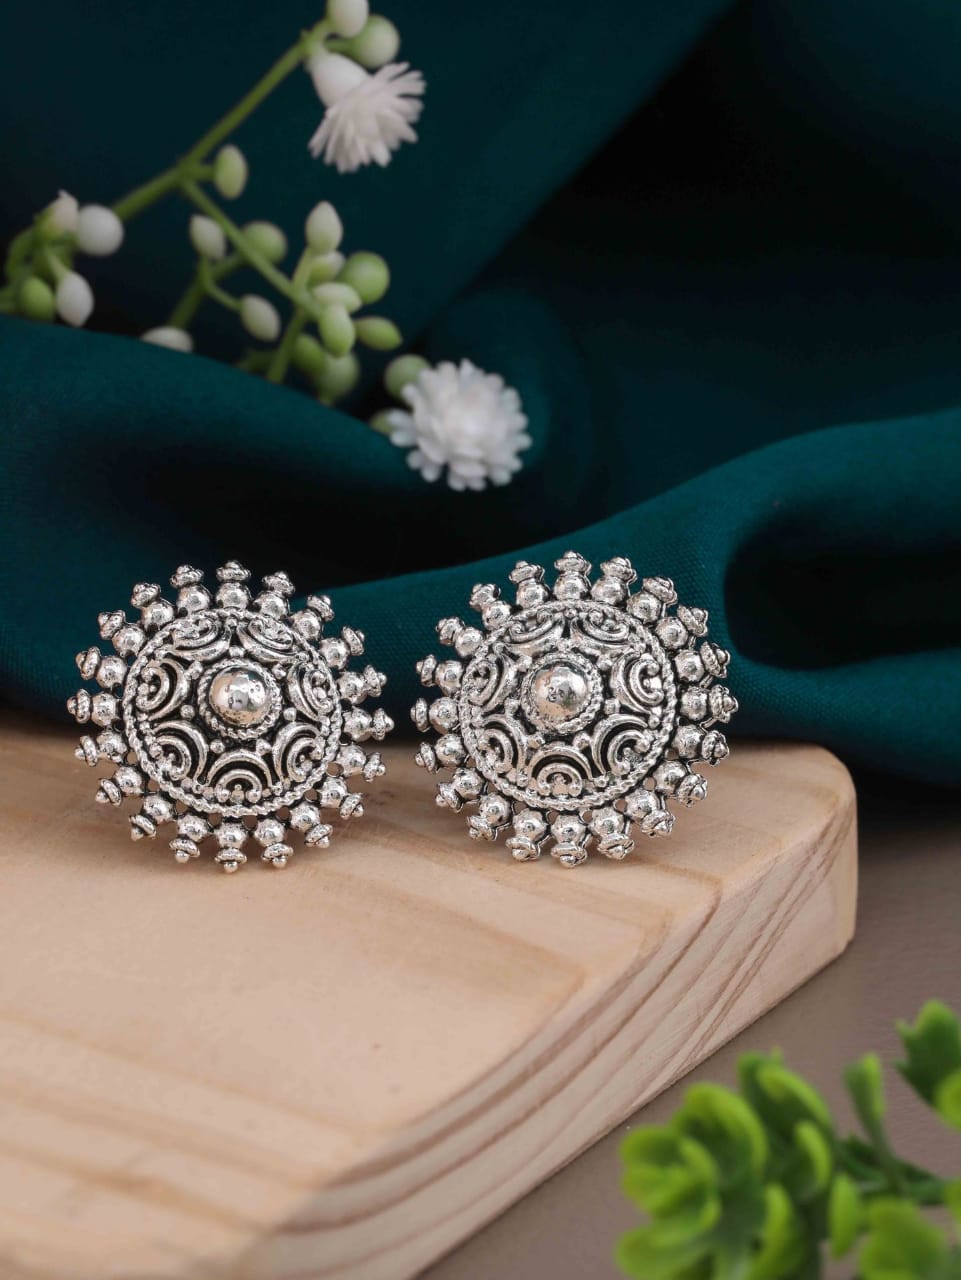 Vembley Korean Diamond Leaf Design Stud Earrings For Women And Girls 2  Pcs/Set at Rs 120/pair | स्टड इयररिंग in New Delhi | ID: 27152899233